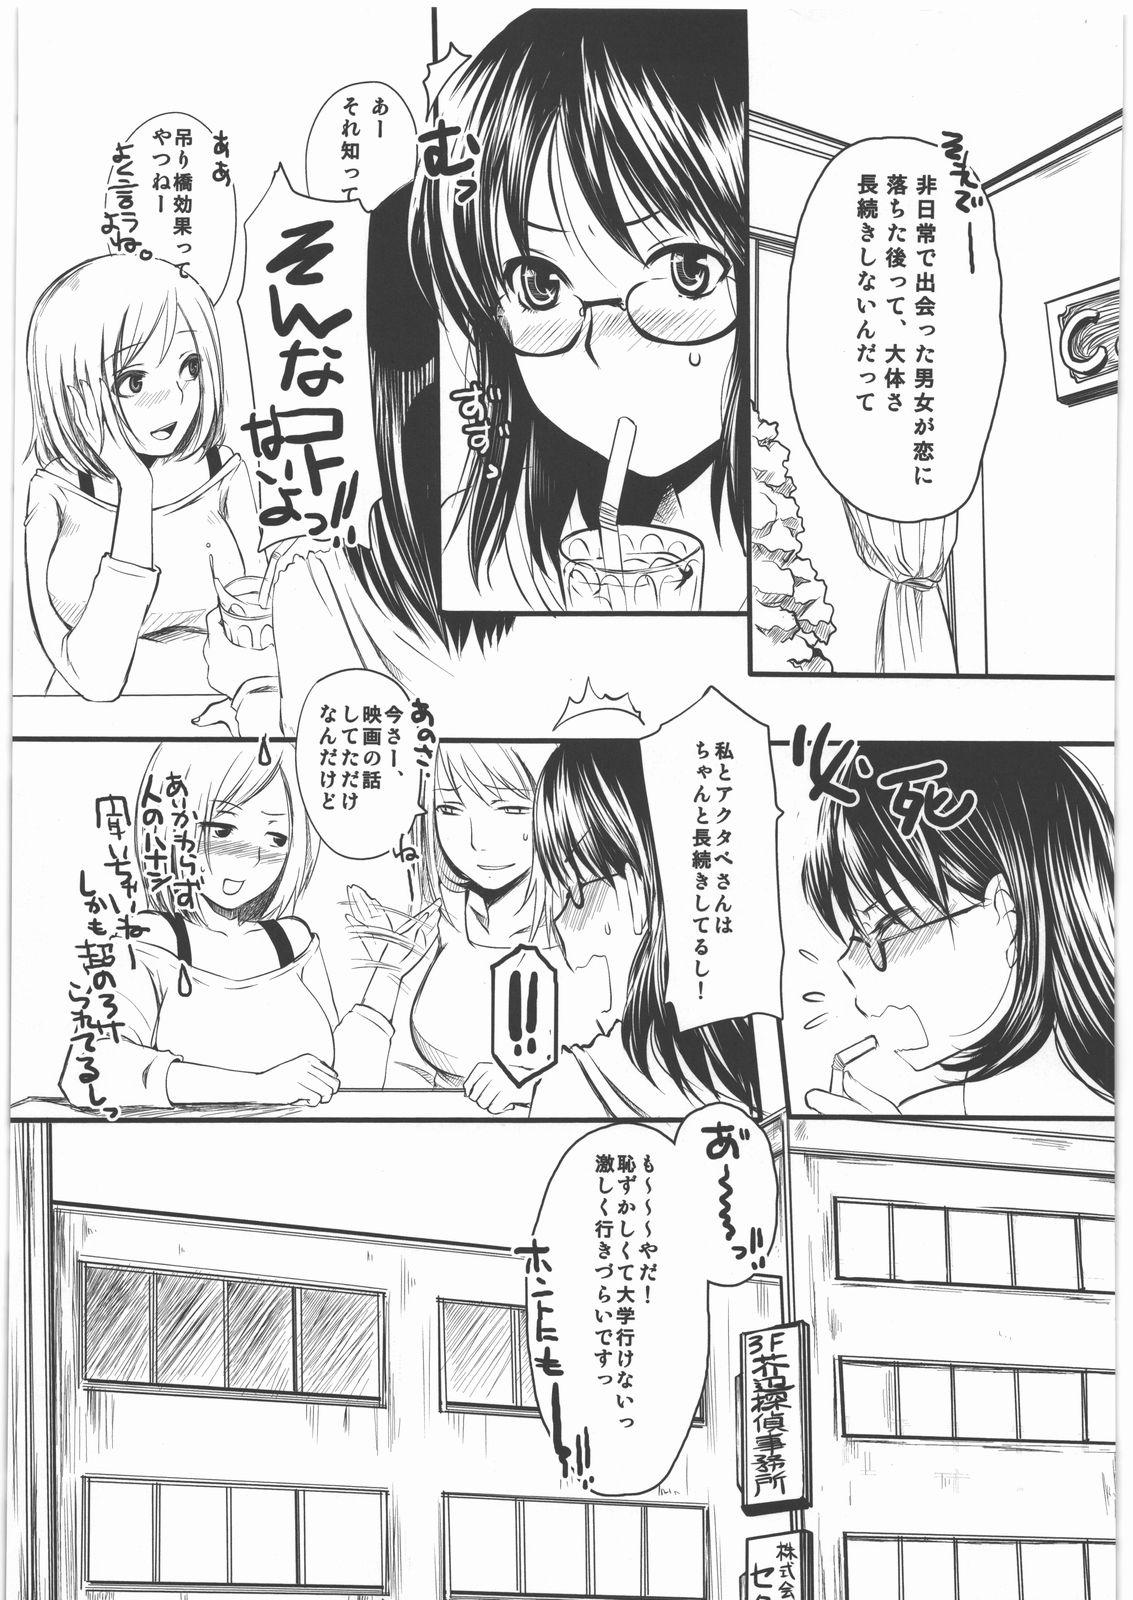 Nut Dokidoki desuyo Akutabe-san - Yondemasuyo azazel san Letsdoeit - Page 4